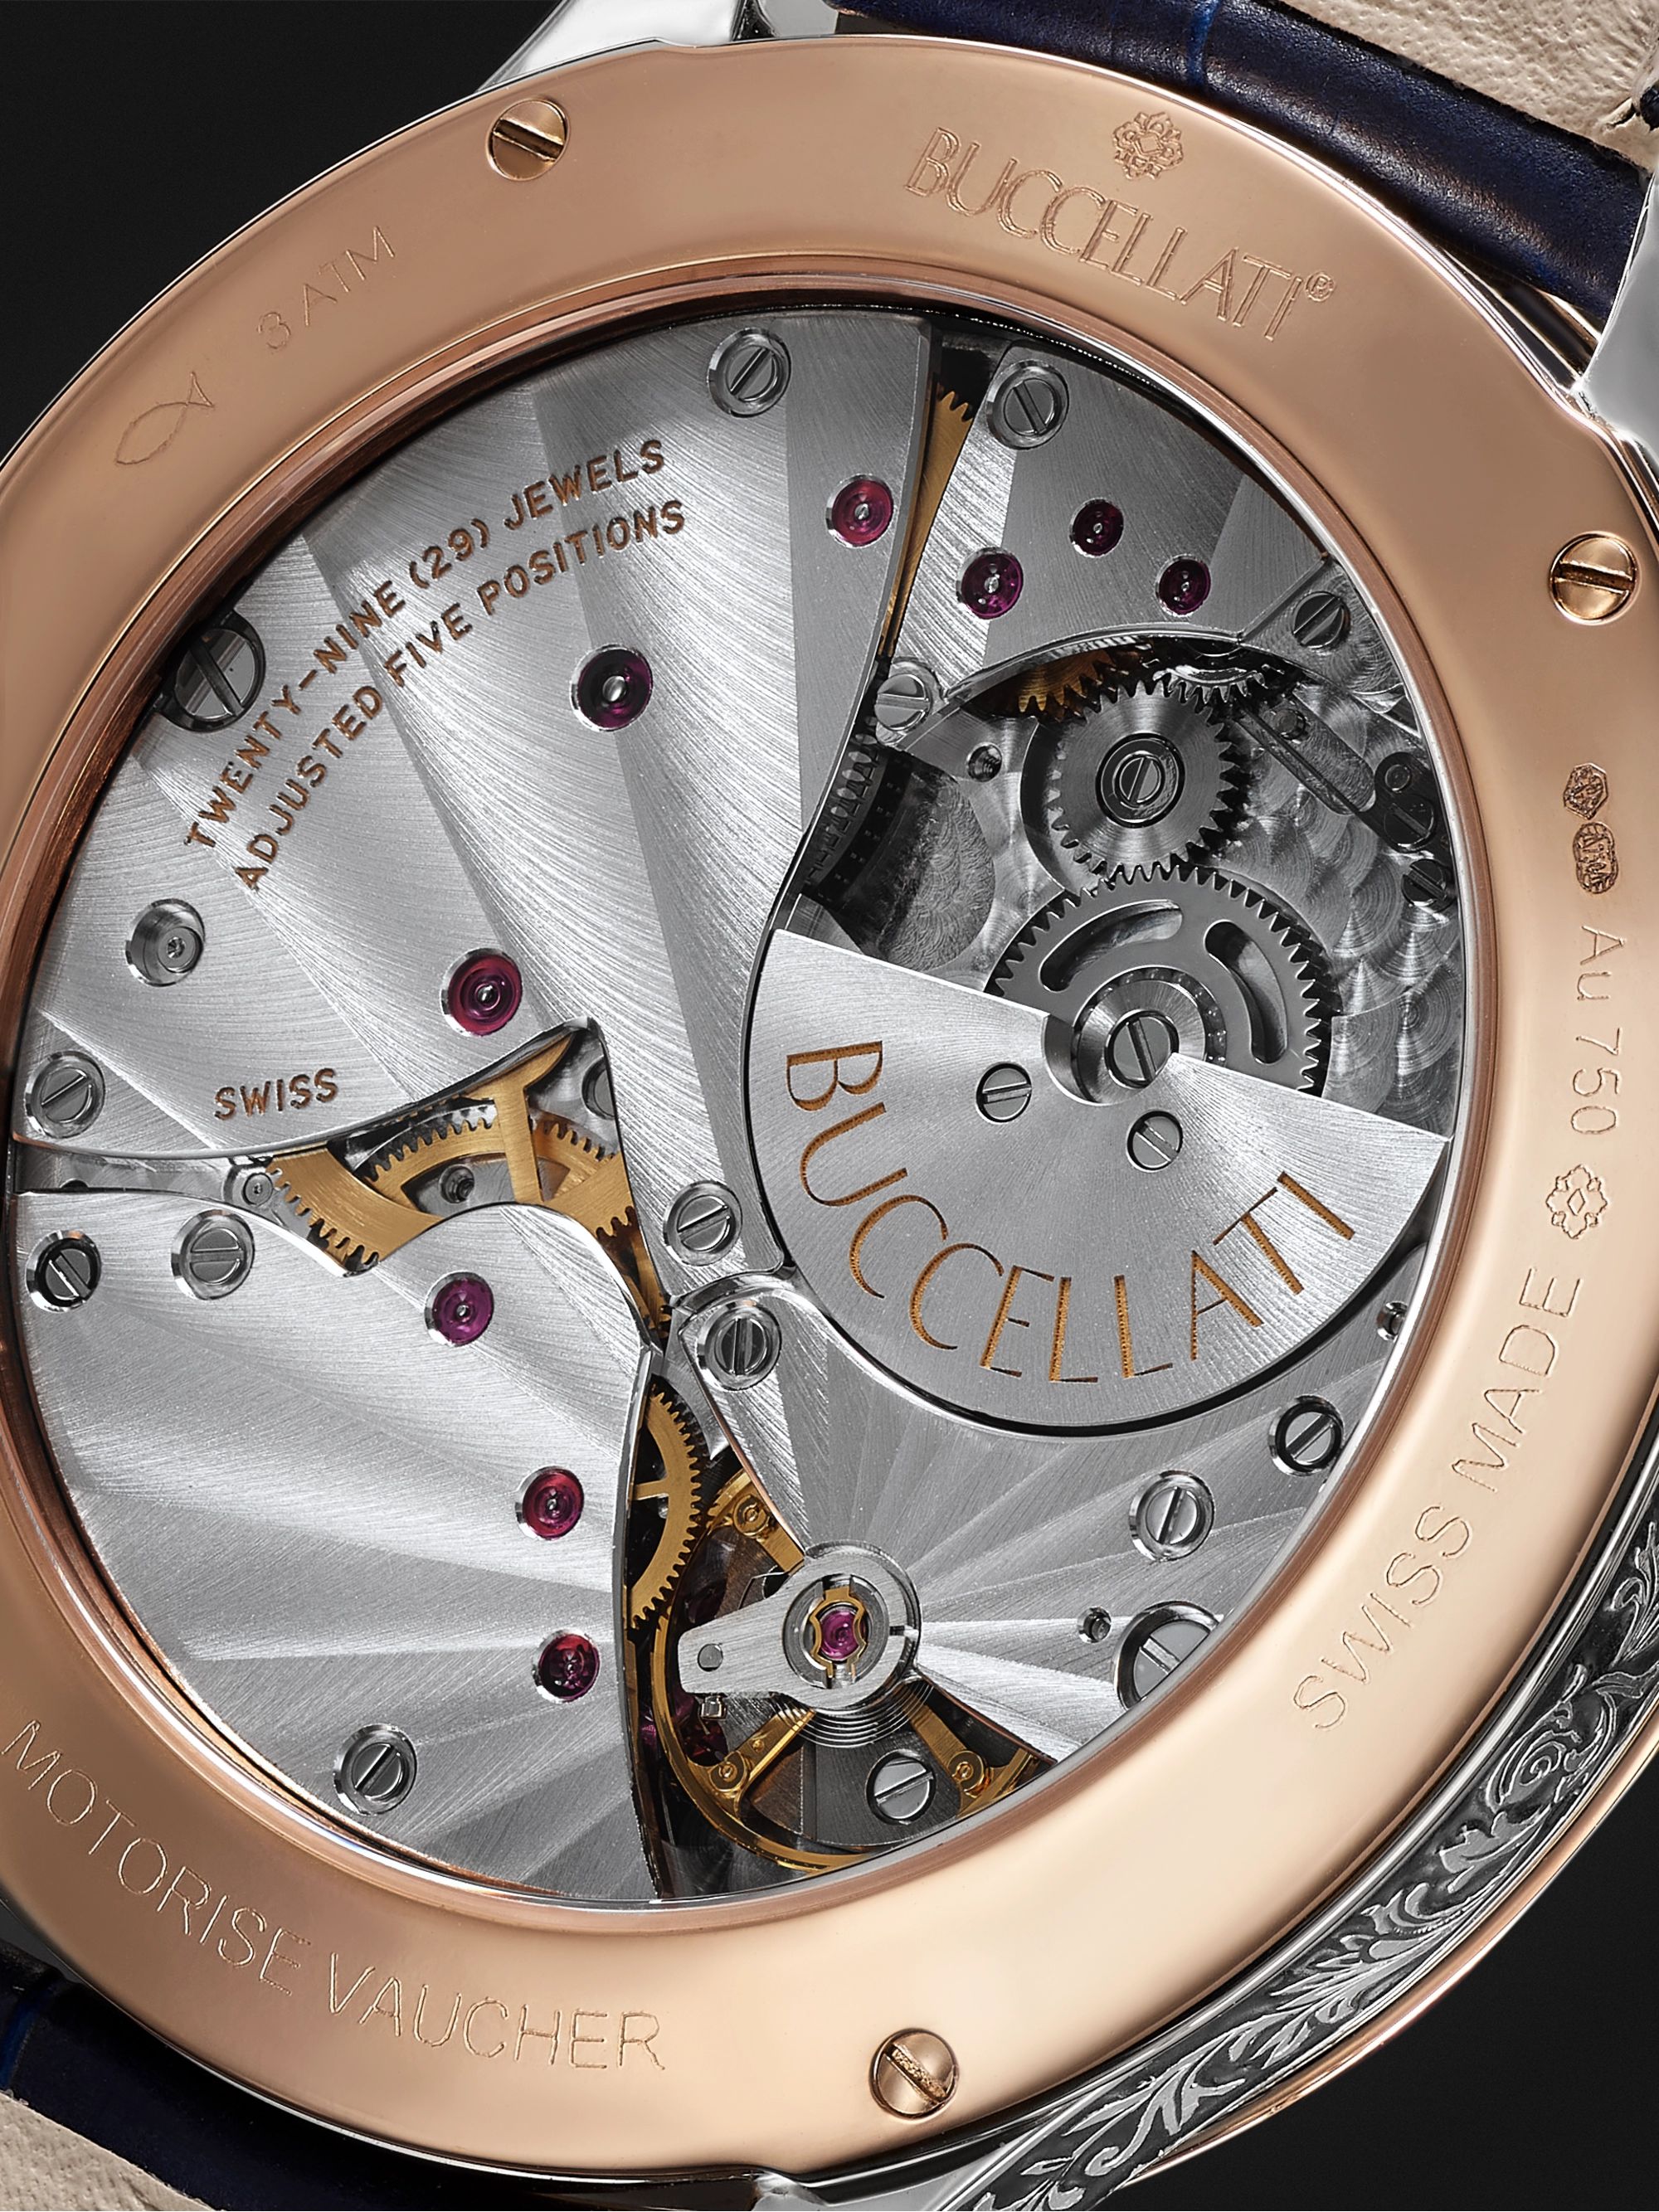 BUCCELLATI Ornatino Automatic 42mm 18-Karat Pink and White Gold and Croc-Effect Leather Watch, Ref. No. WAUMGE013179